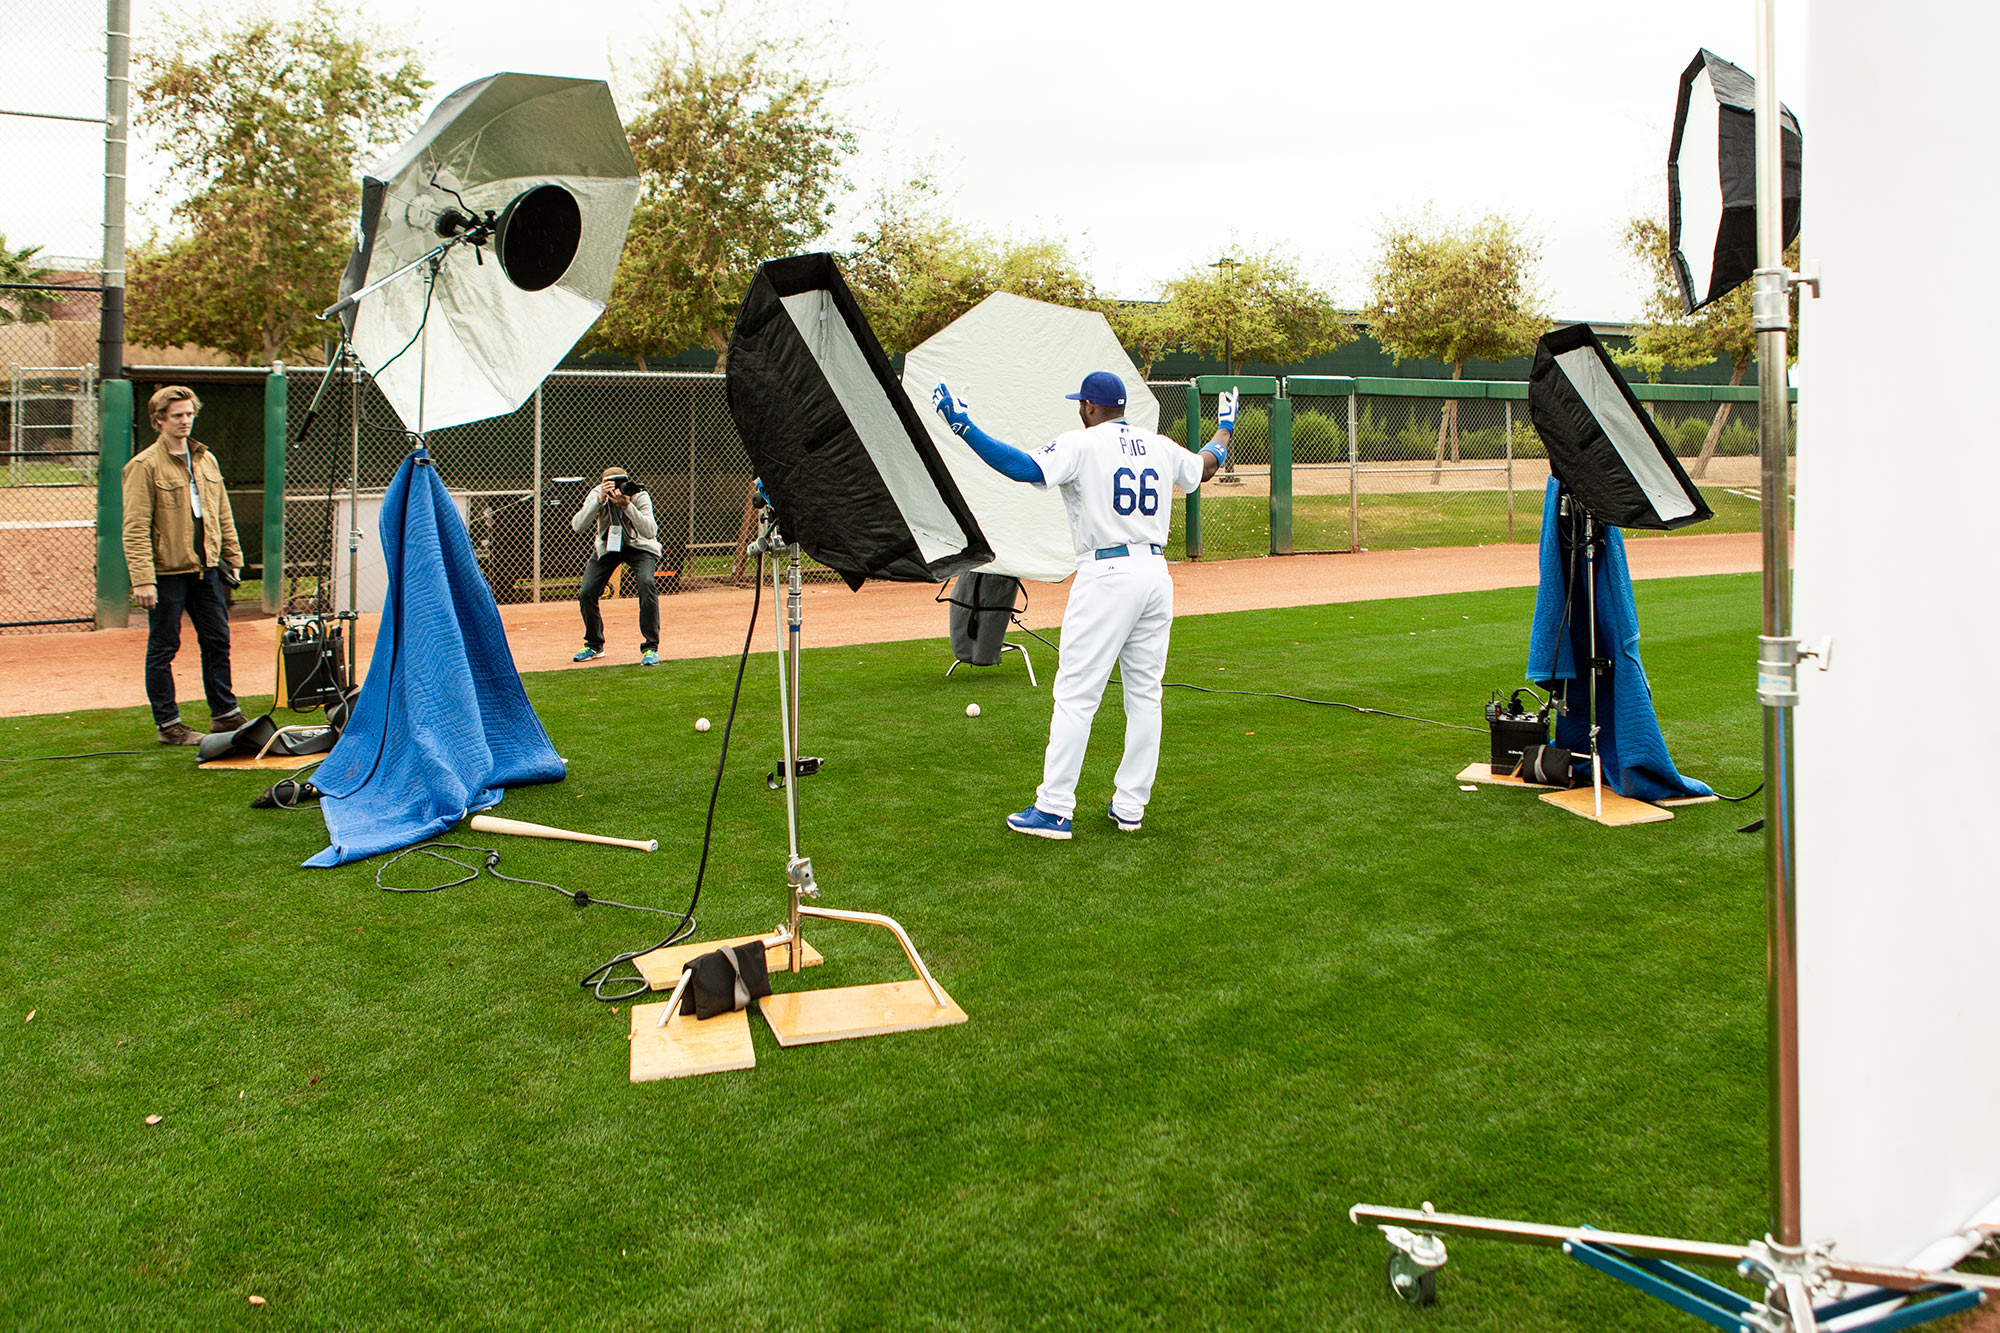 Philadelphia Sports Photographer Steve Boyle  - Behind the Scenes Photoshoot - Los Angeles Dodgers